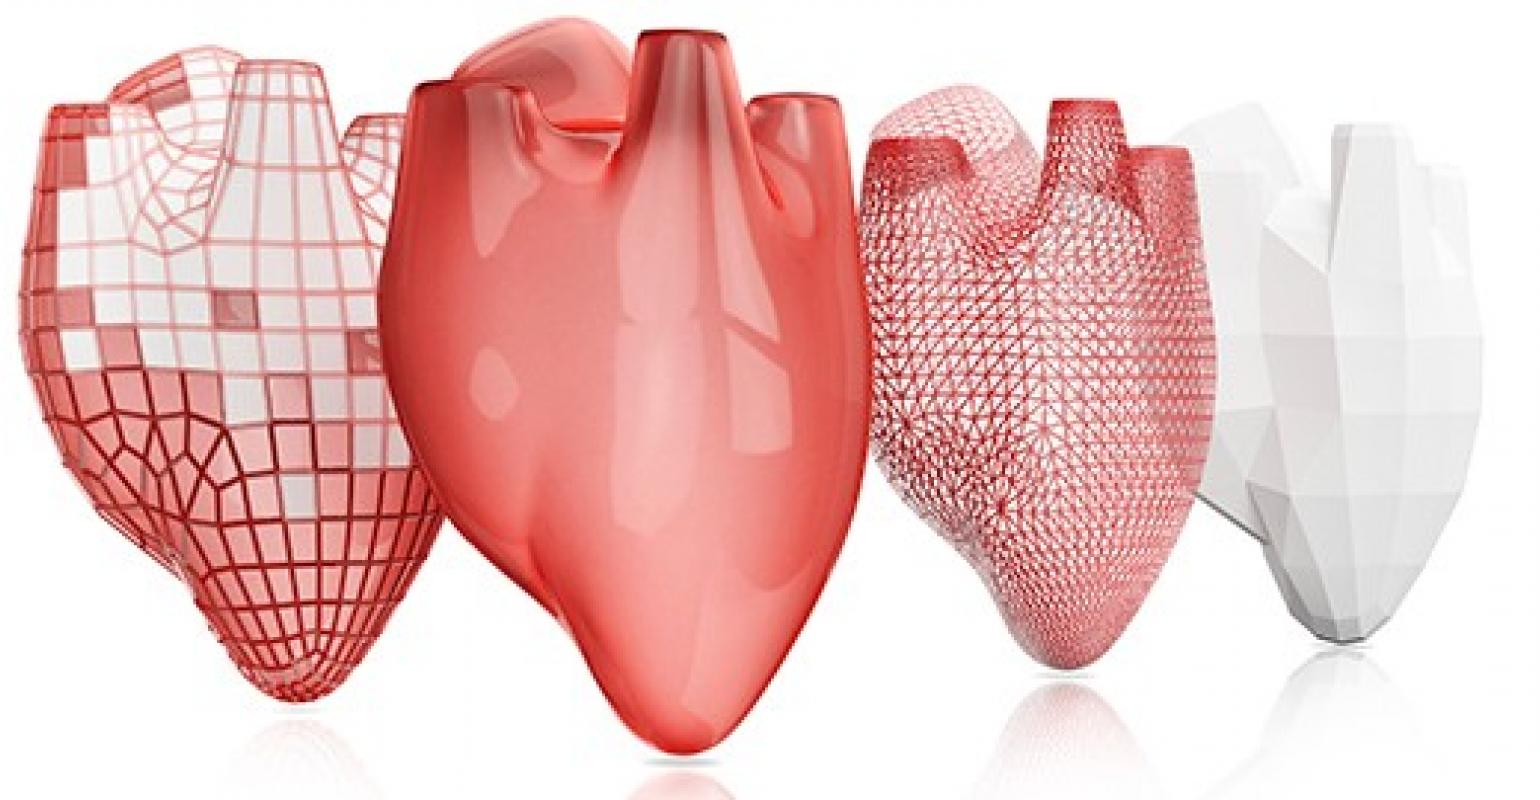 3D Bioprinting of Living Human Tissues Organs Market